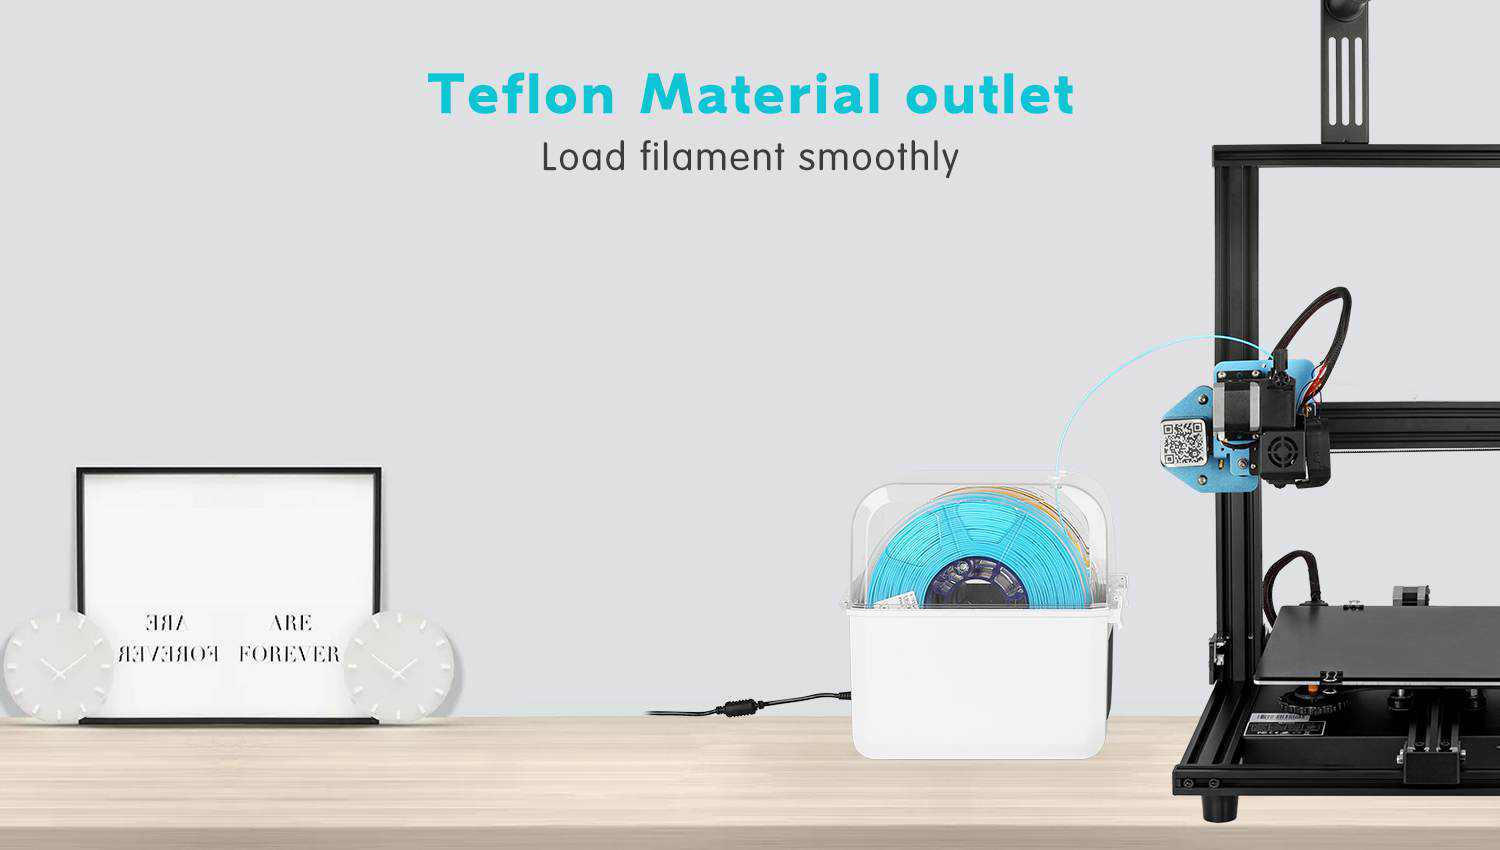 teflon-material-outlet-for-sovol-3d-printer-filament-dryer-machine